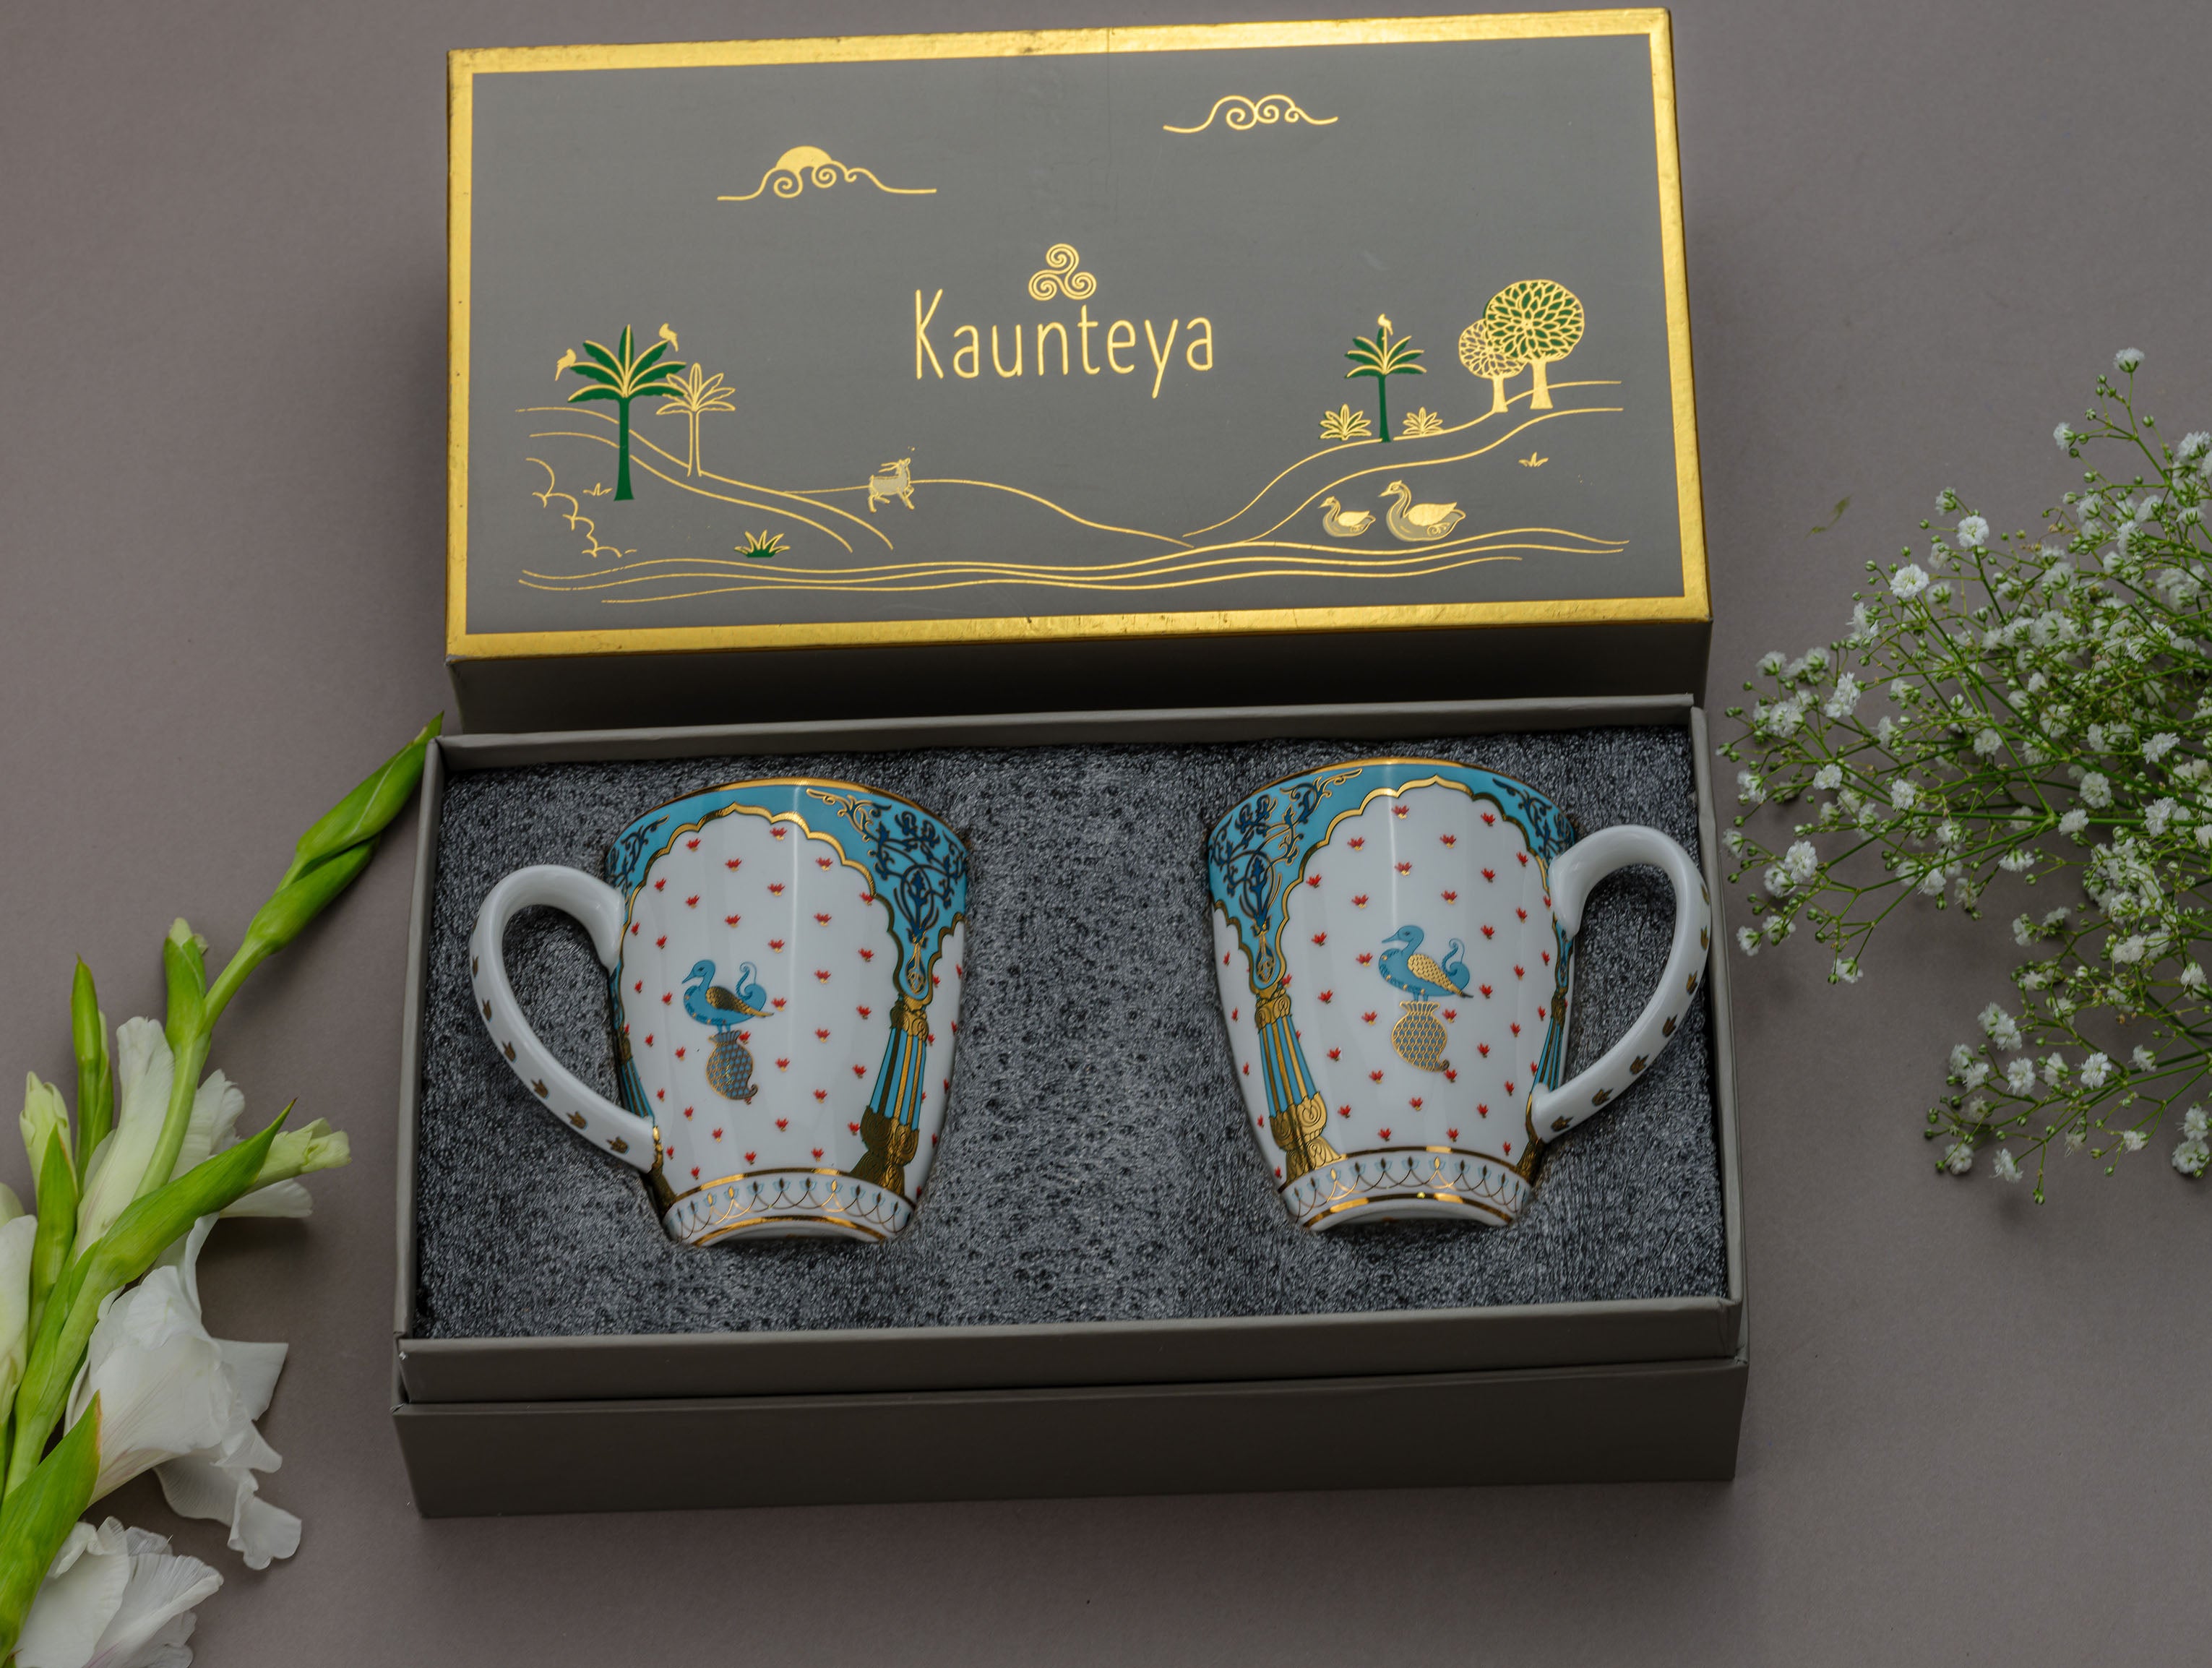 BTäT- Floral Tea Cups and Saucers (Yellow – 8 oz) – BTAT